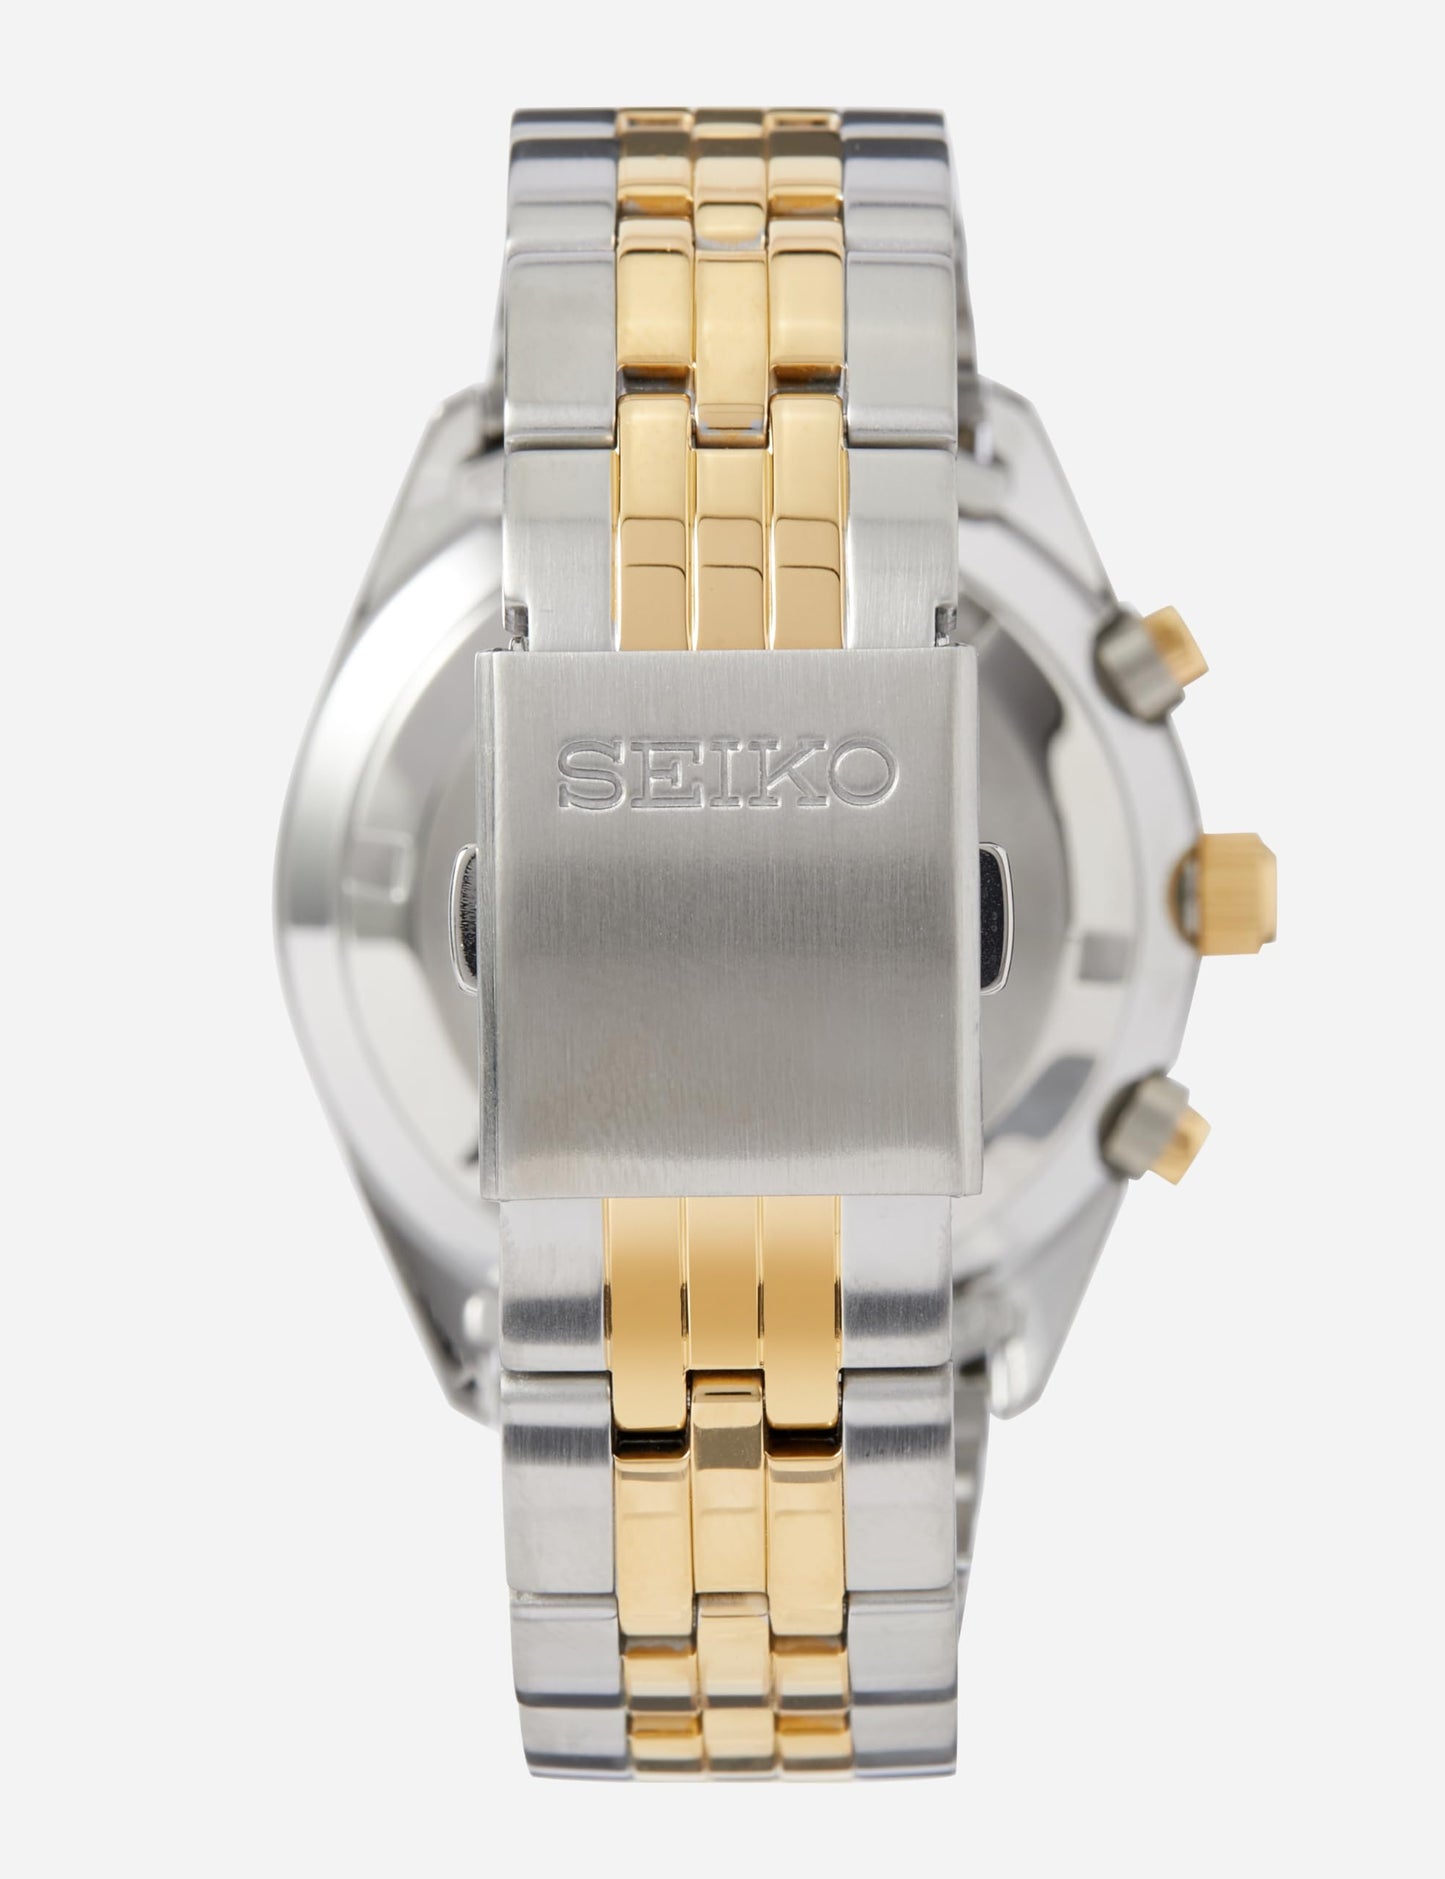 Seiko Dress Chronograph Men's Watch